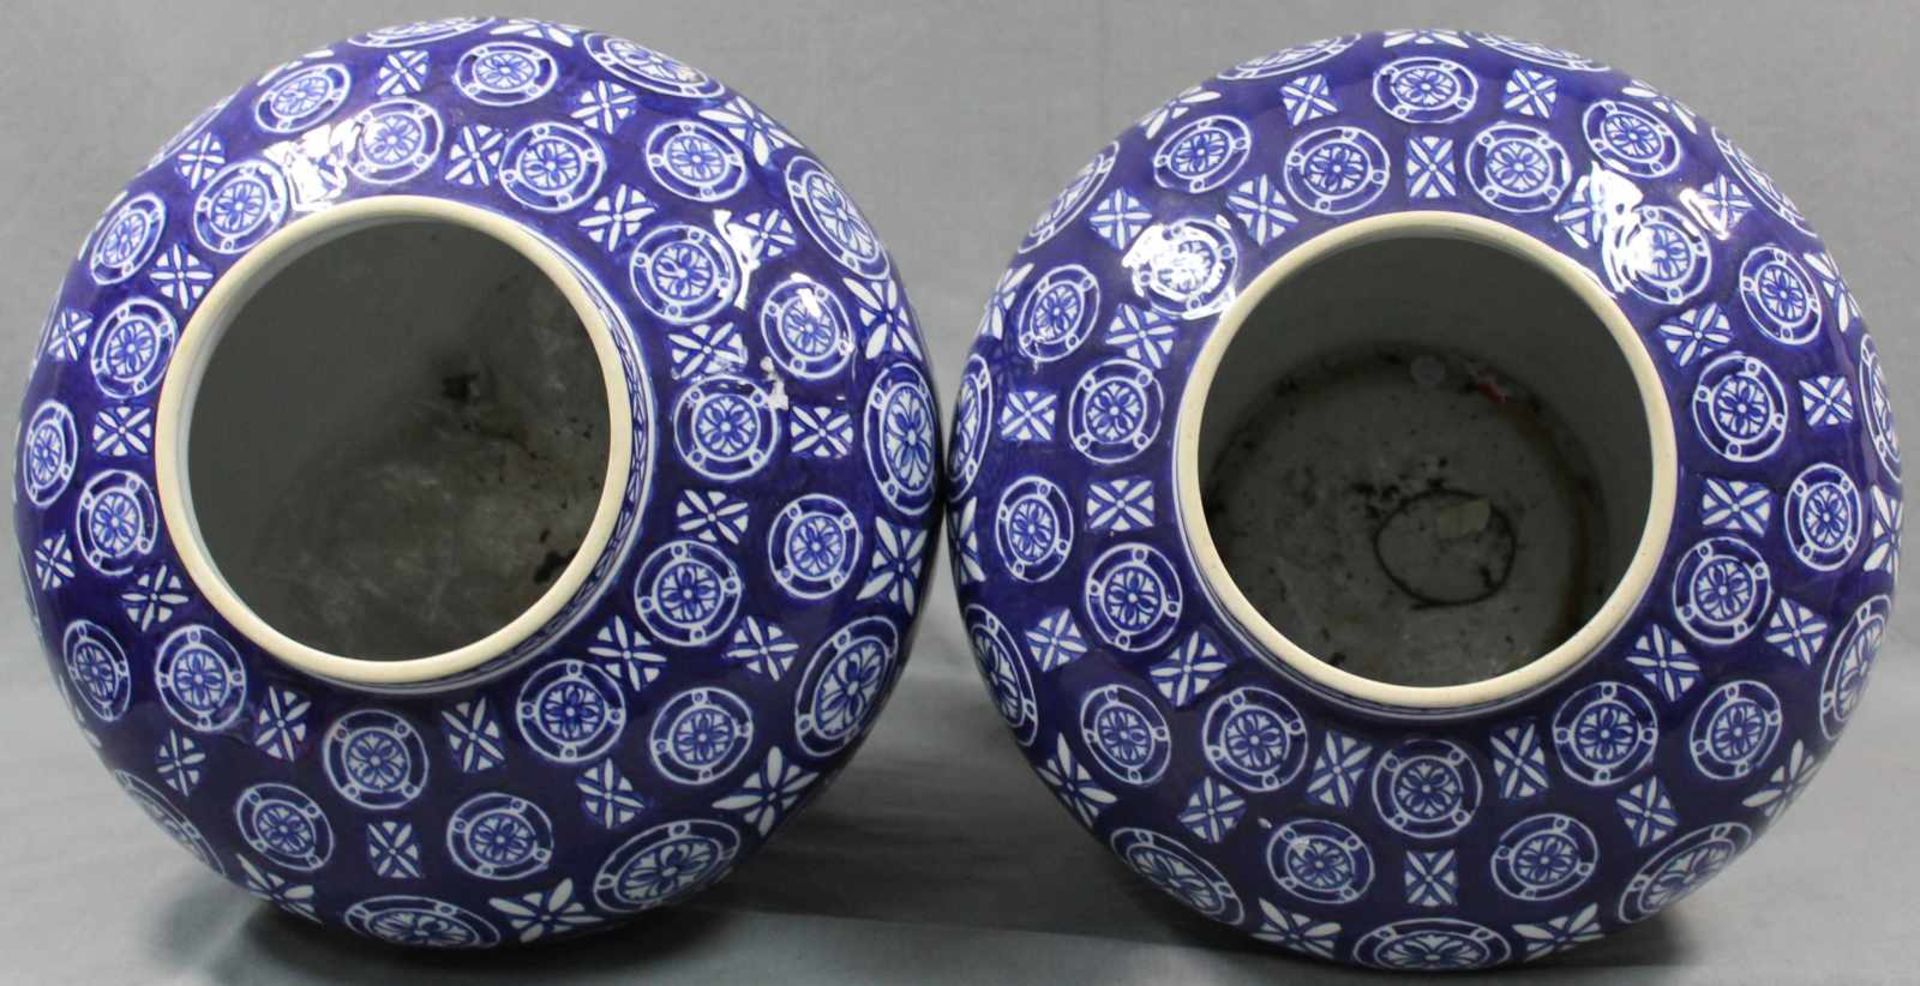 2 lidded vessels. Porcelain. Proably China. - Image 6 of 8